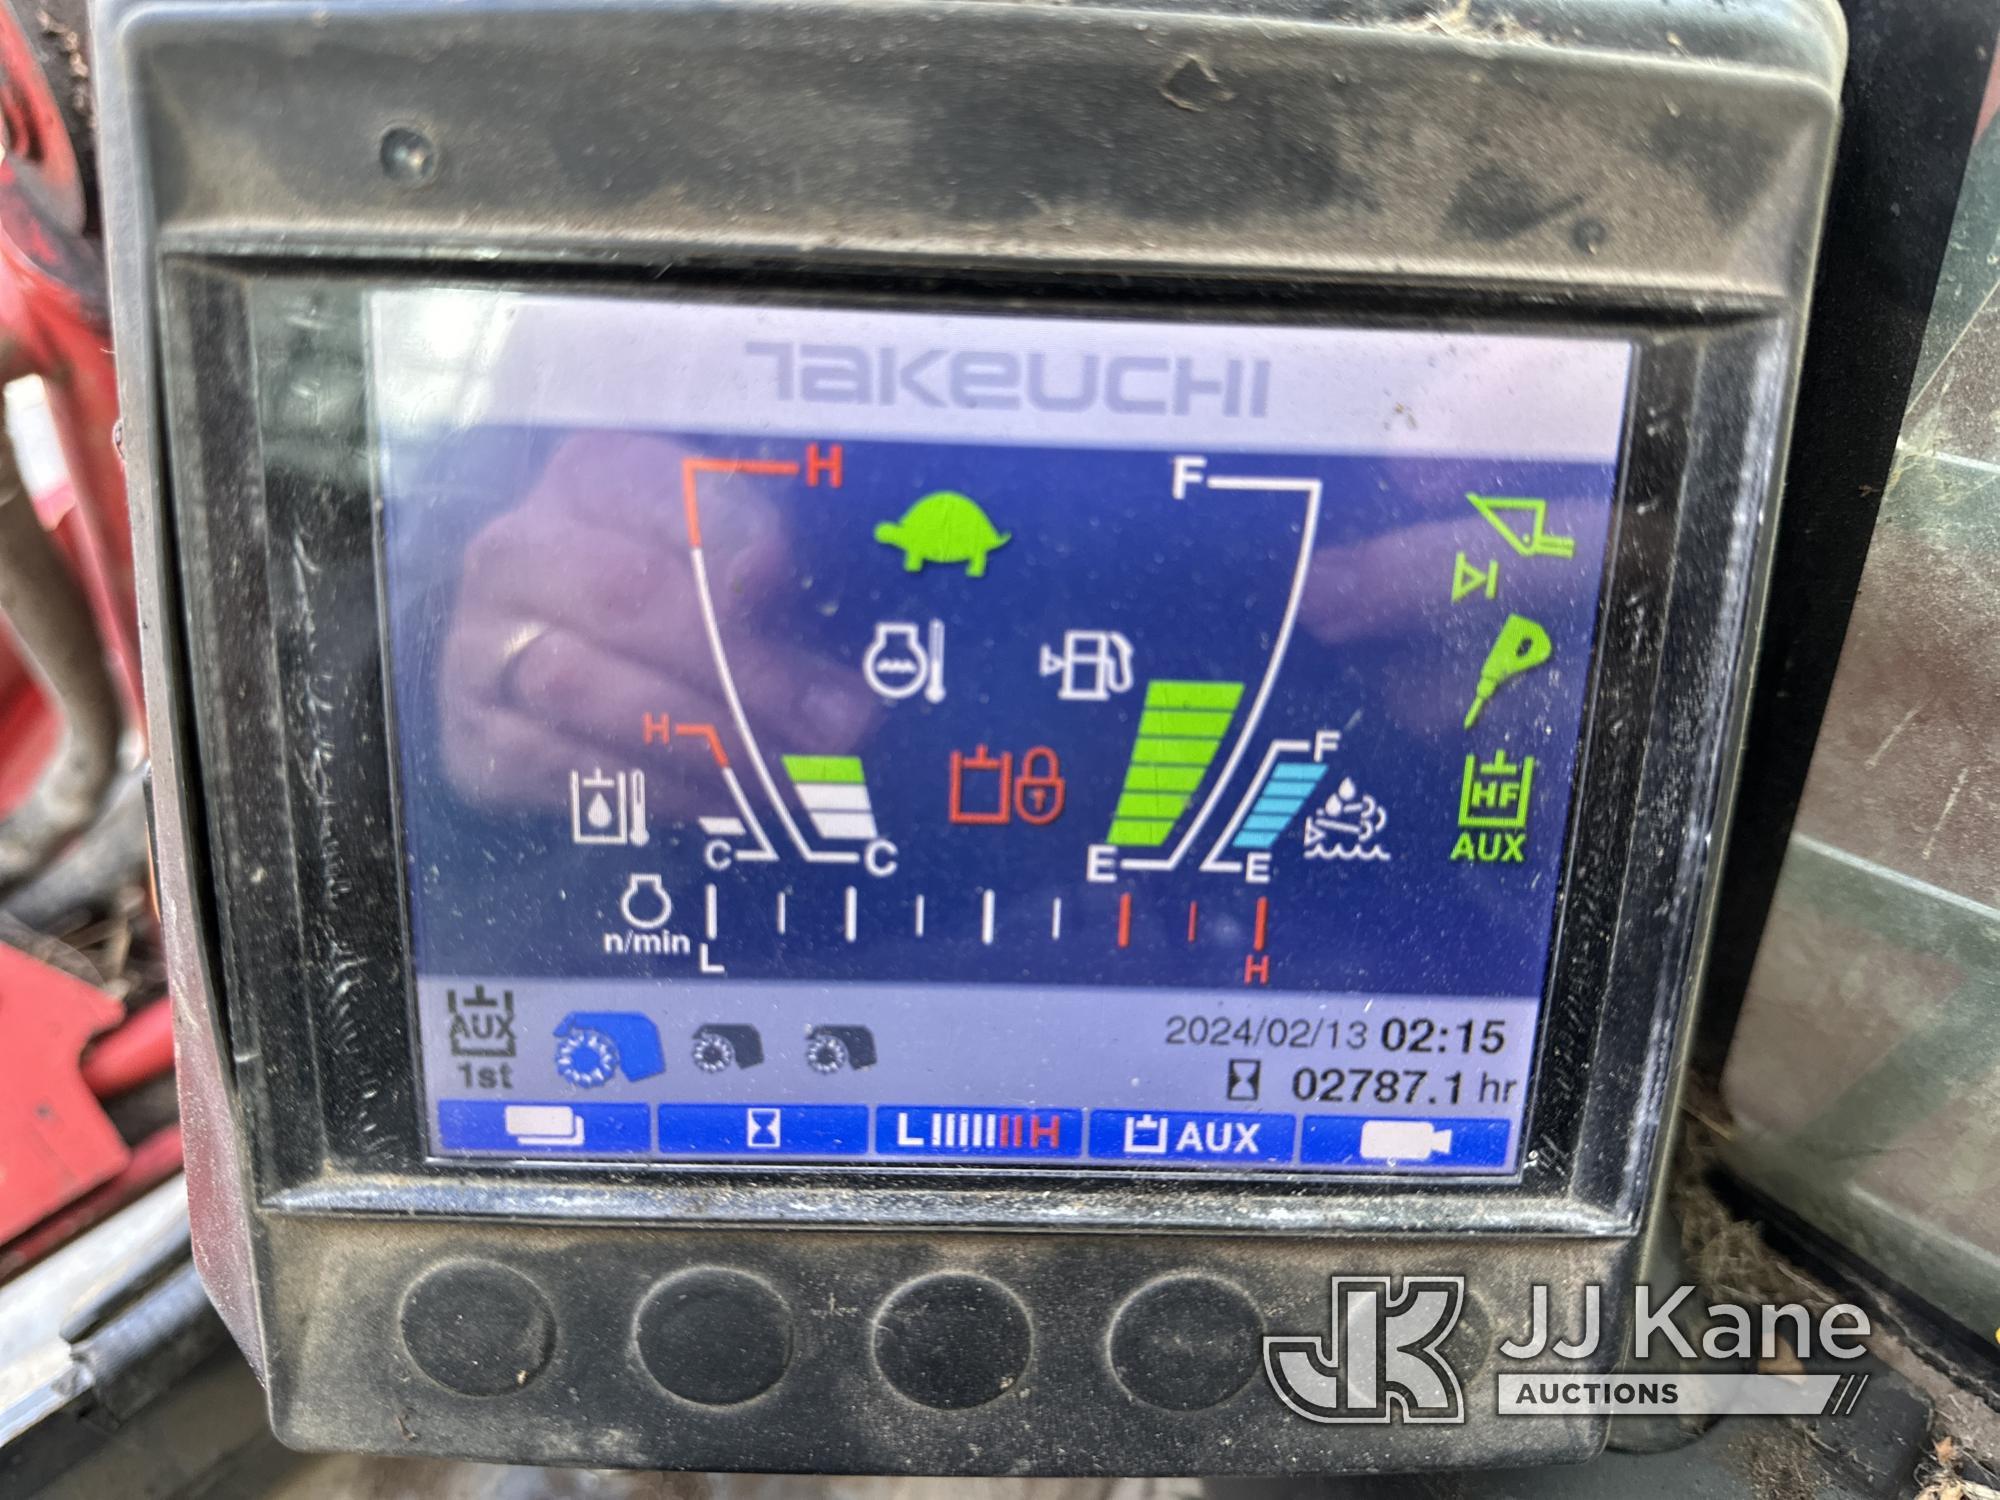 (Wakefield, VA) 2019 Takeuchi TL12R2 High Flow Crawler Shredder/Mulcher Jump To Start, Runs) (Radiat